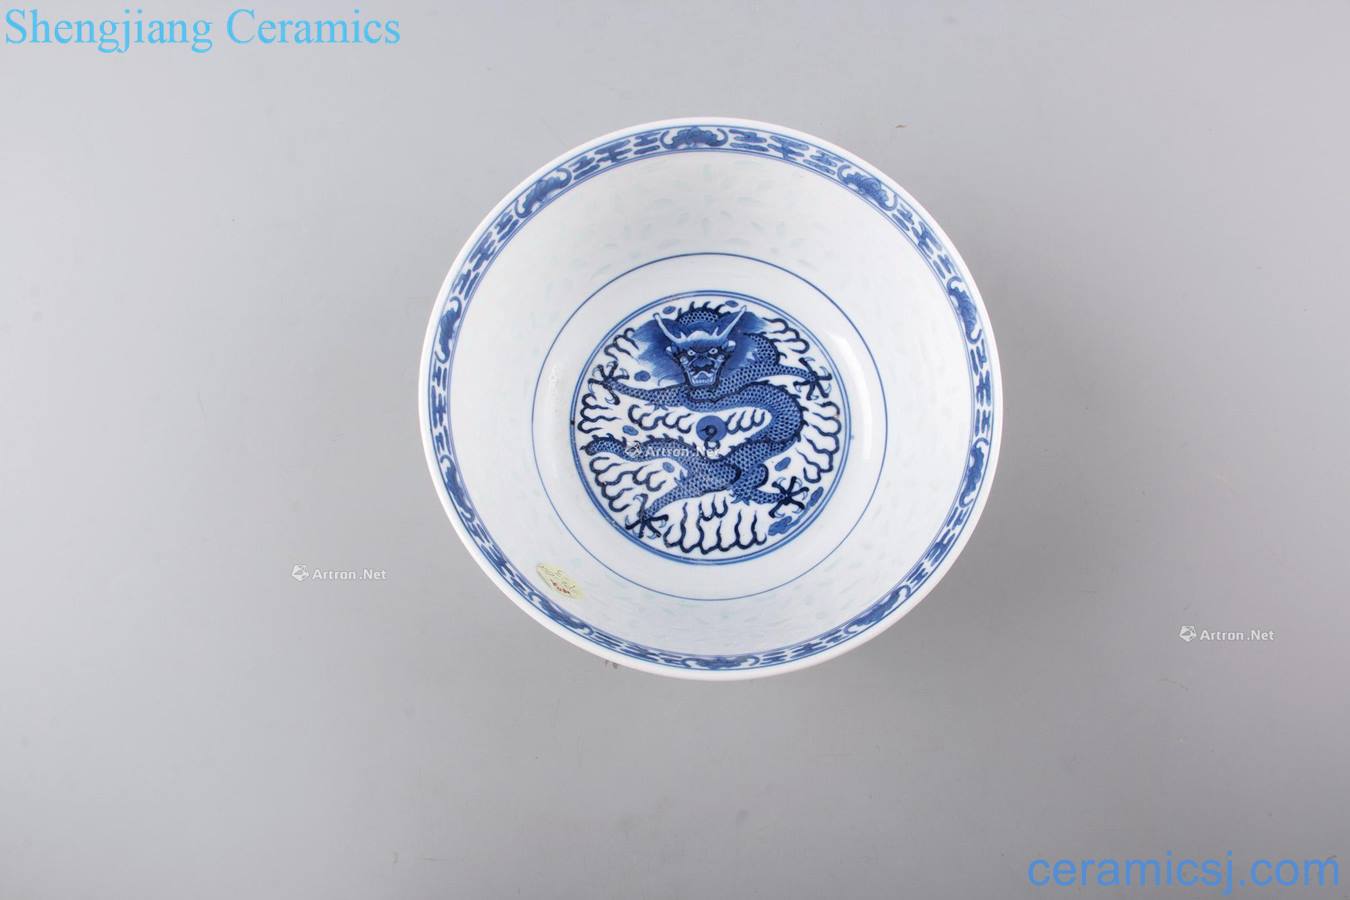 Qing guangxu Blue and white dragon kilns were big bowl